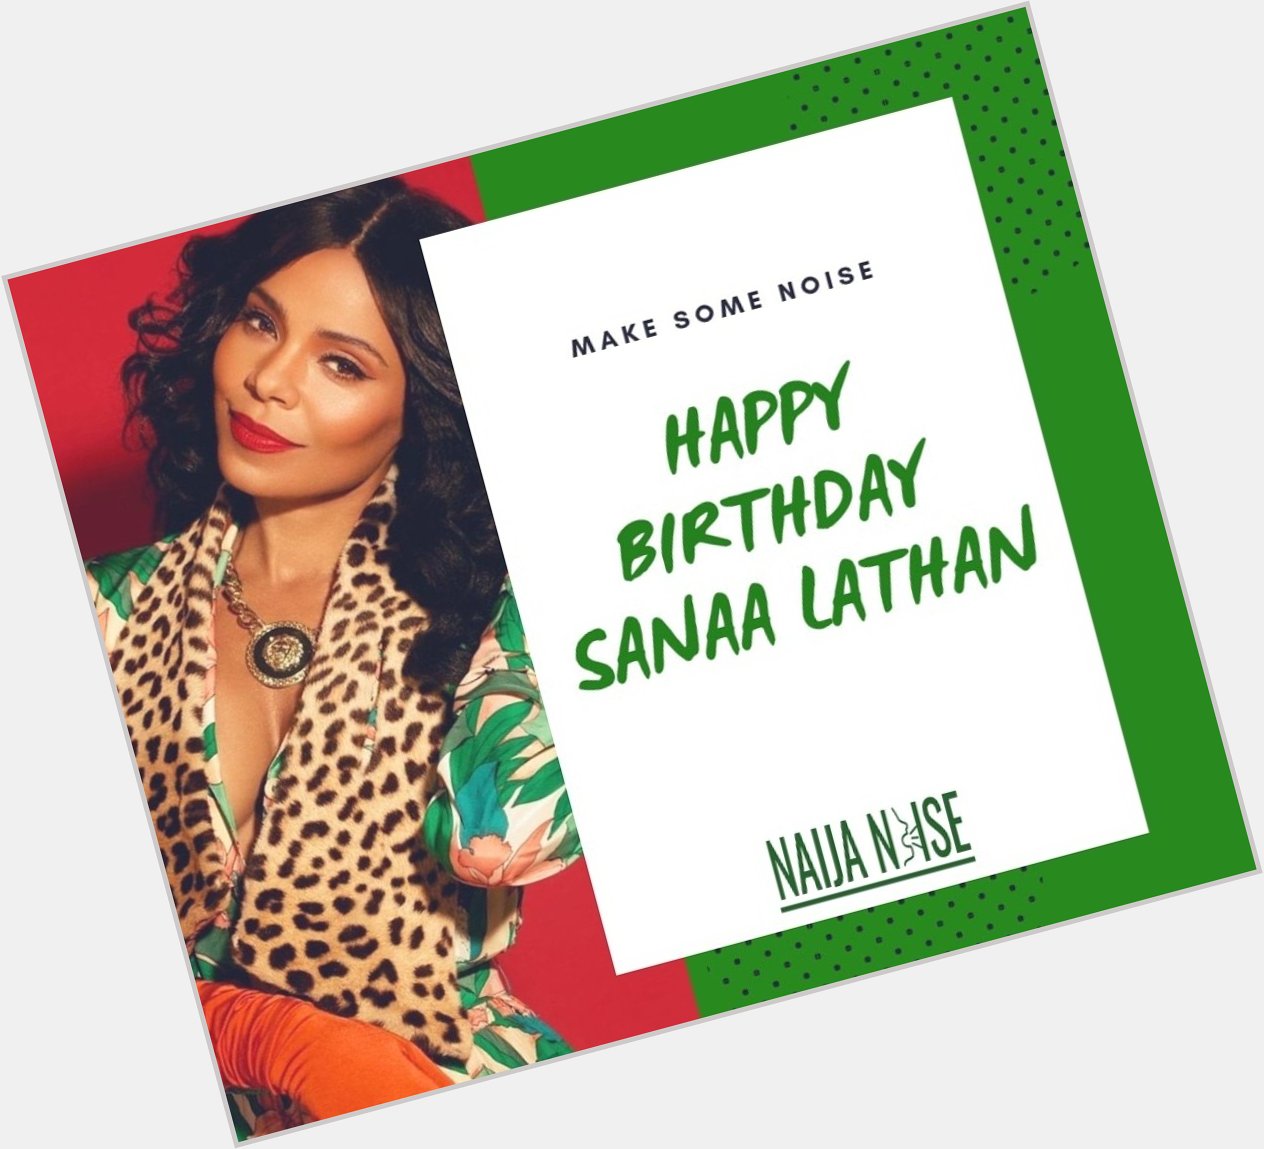 Happy Birthday Hollywood Actress Sanaa Lathan!   